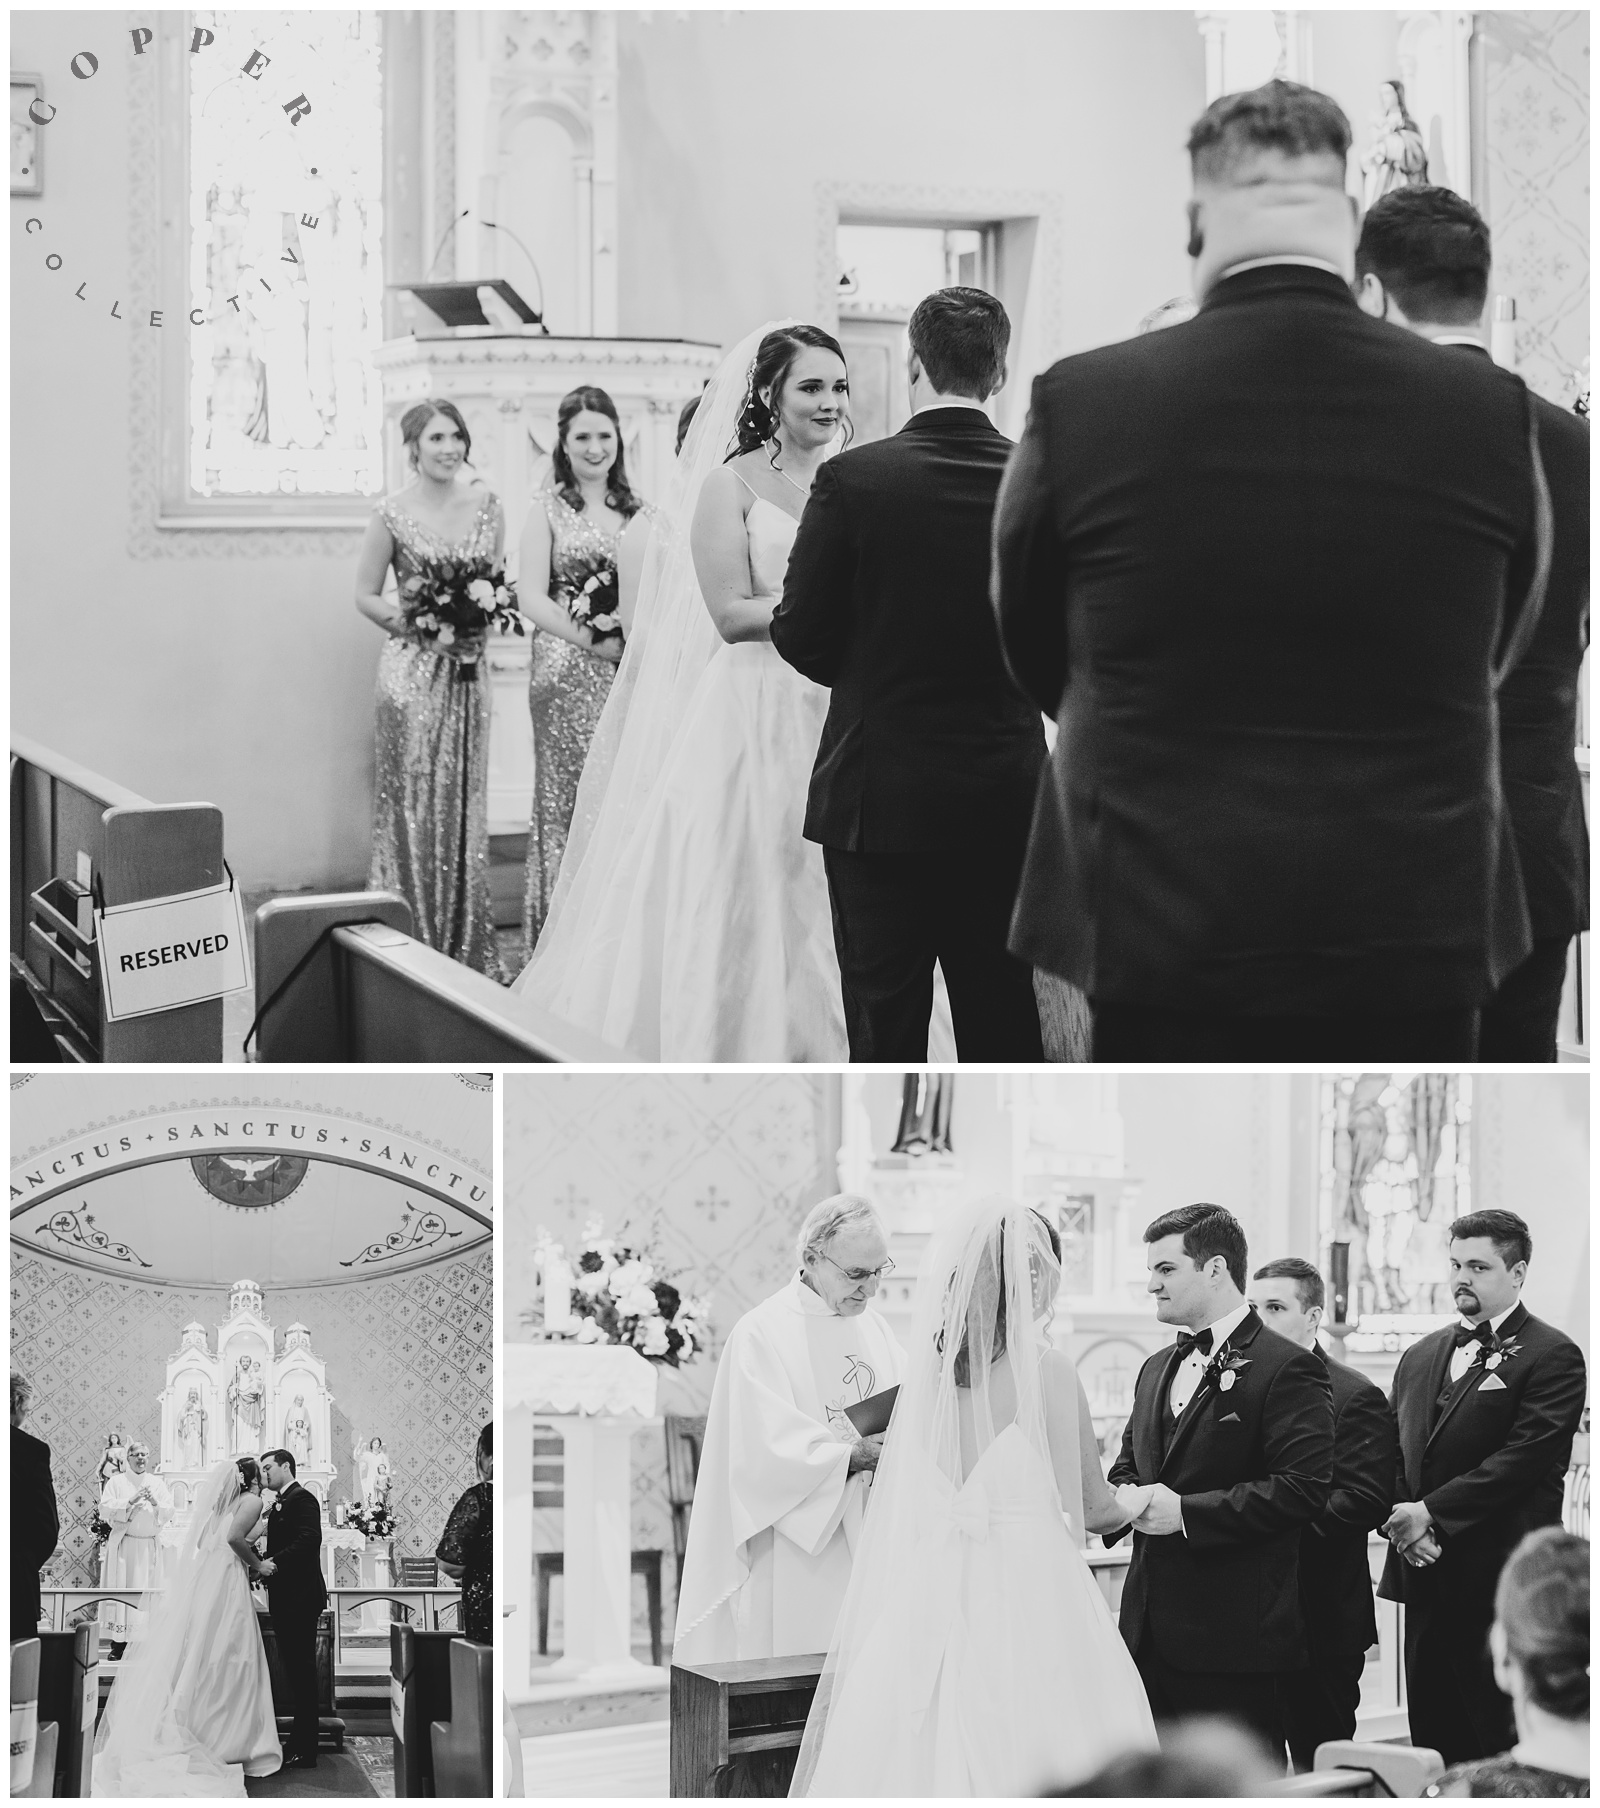 San antonio texas catholic church wedding ceremony